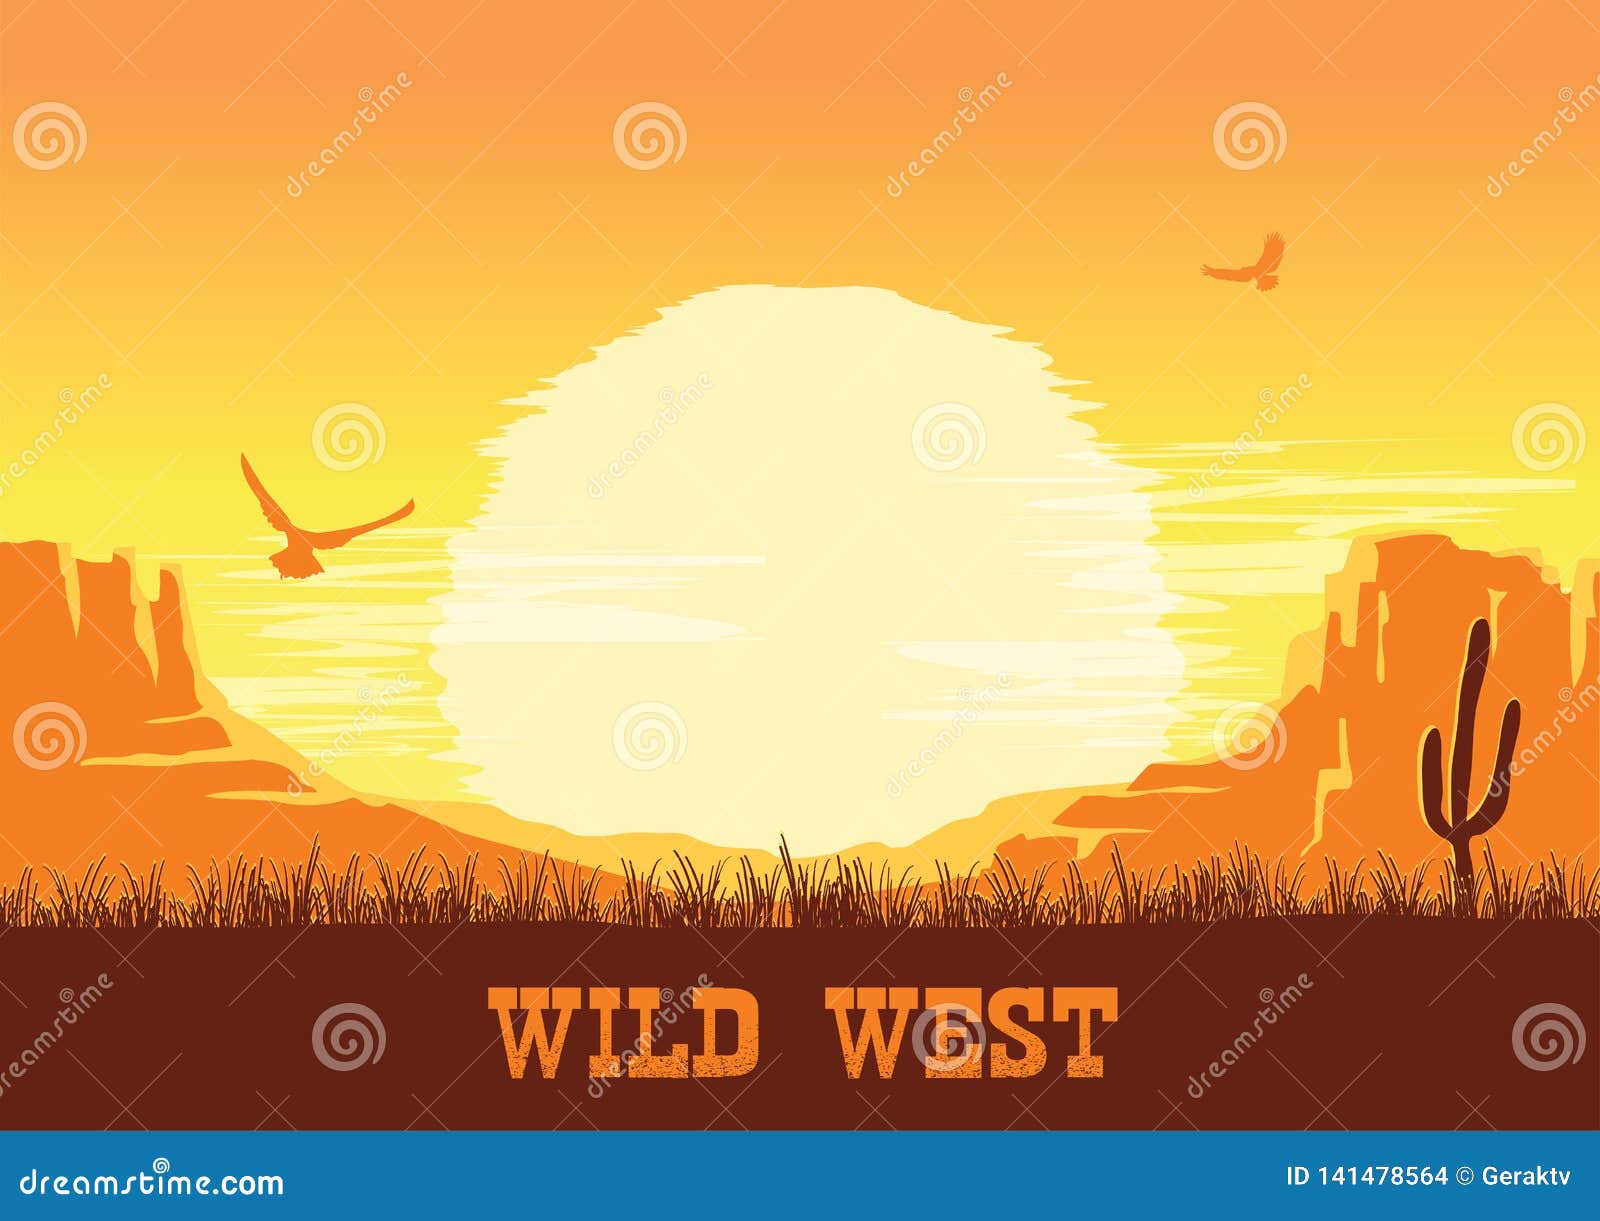 western american desert nature background.